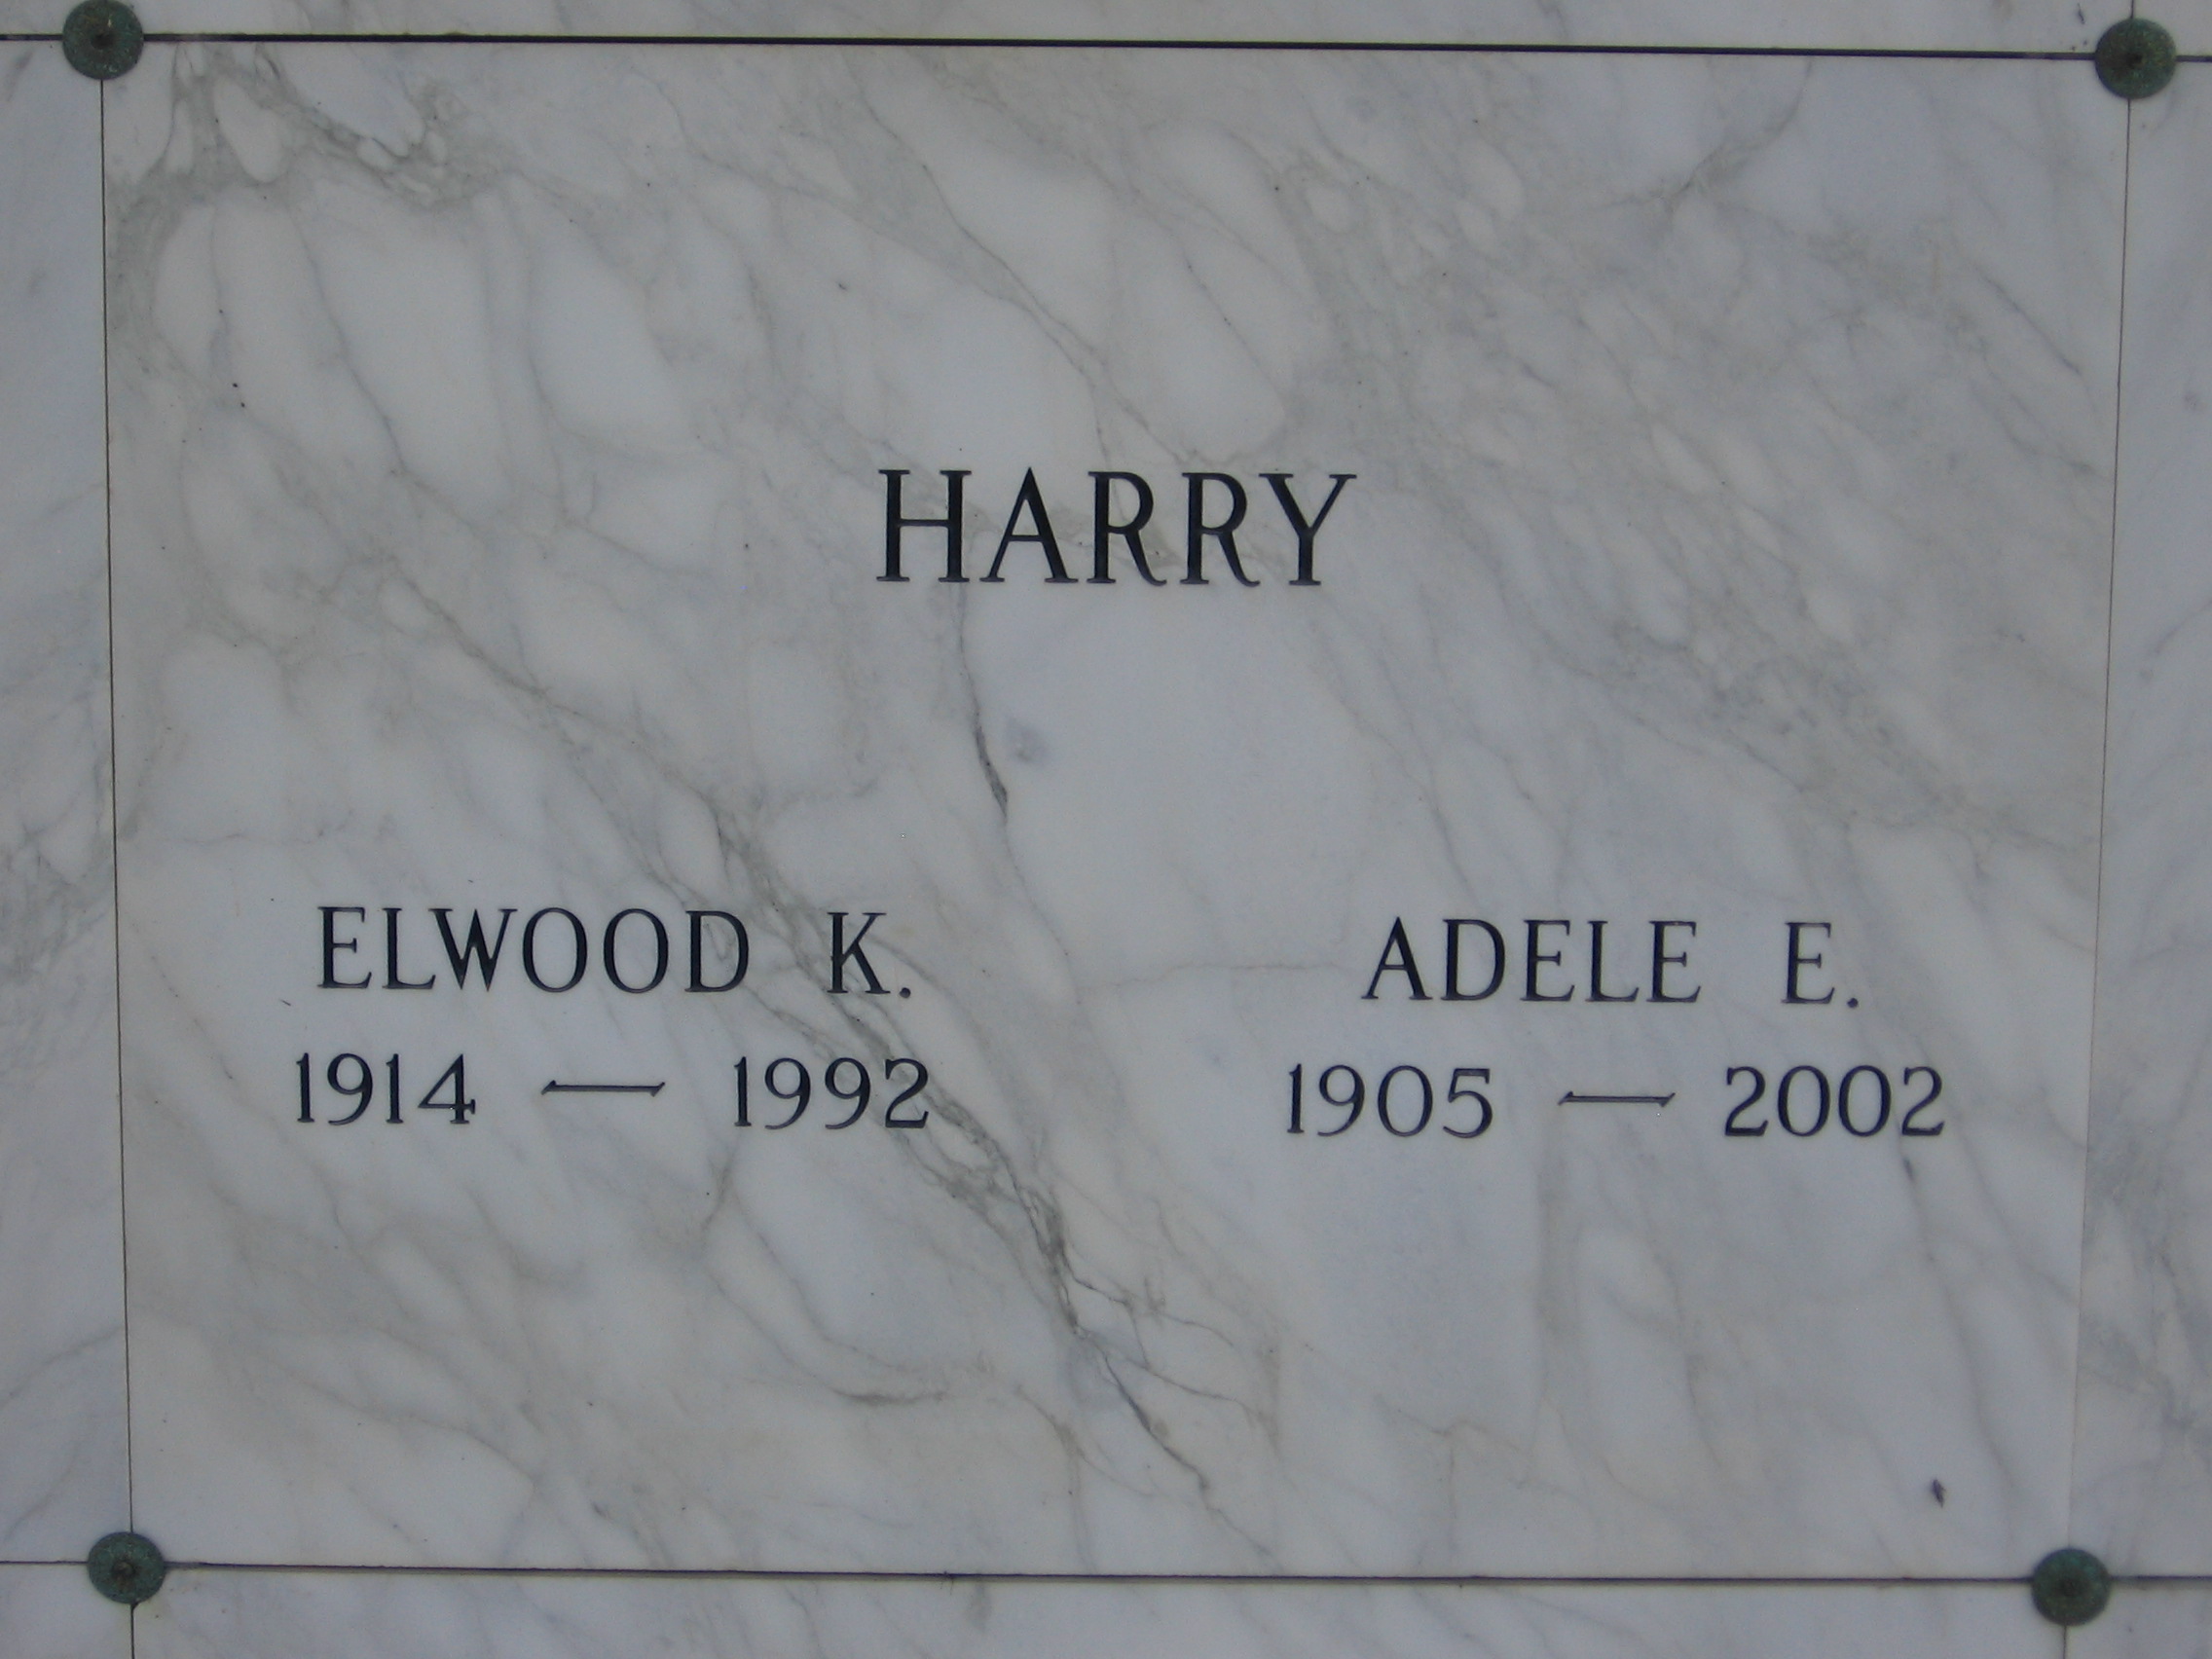 Elwood K Harry